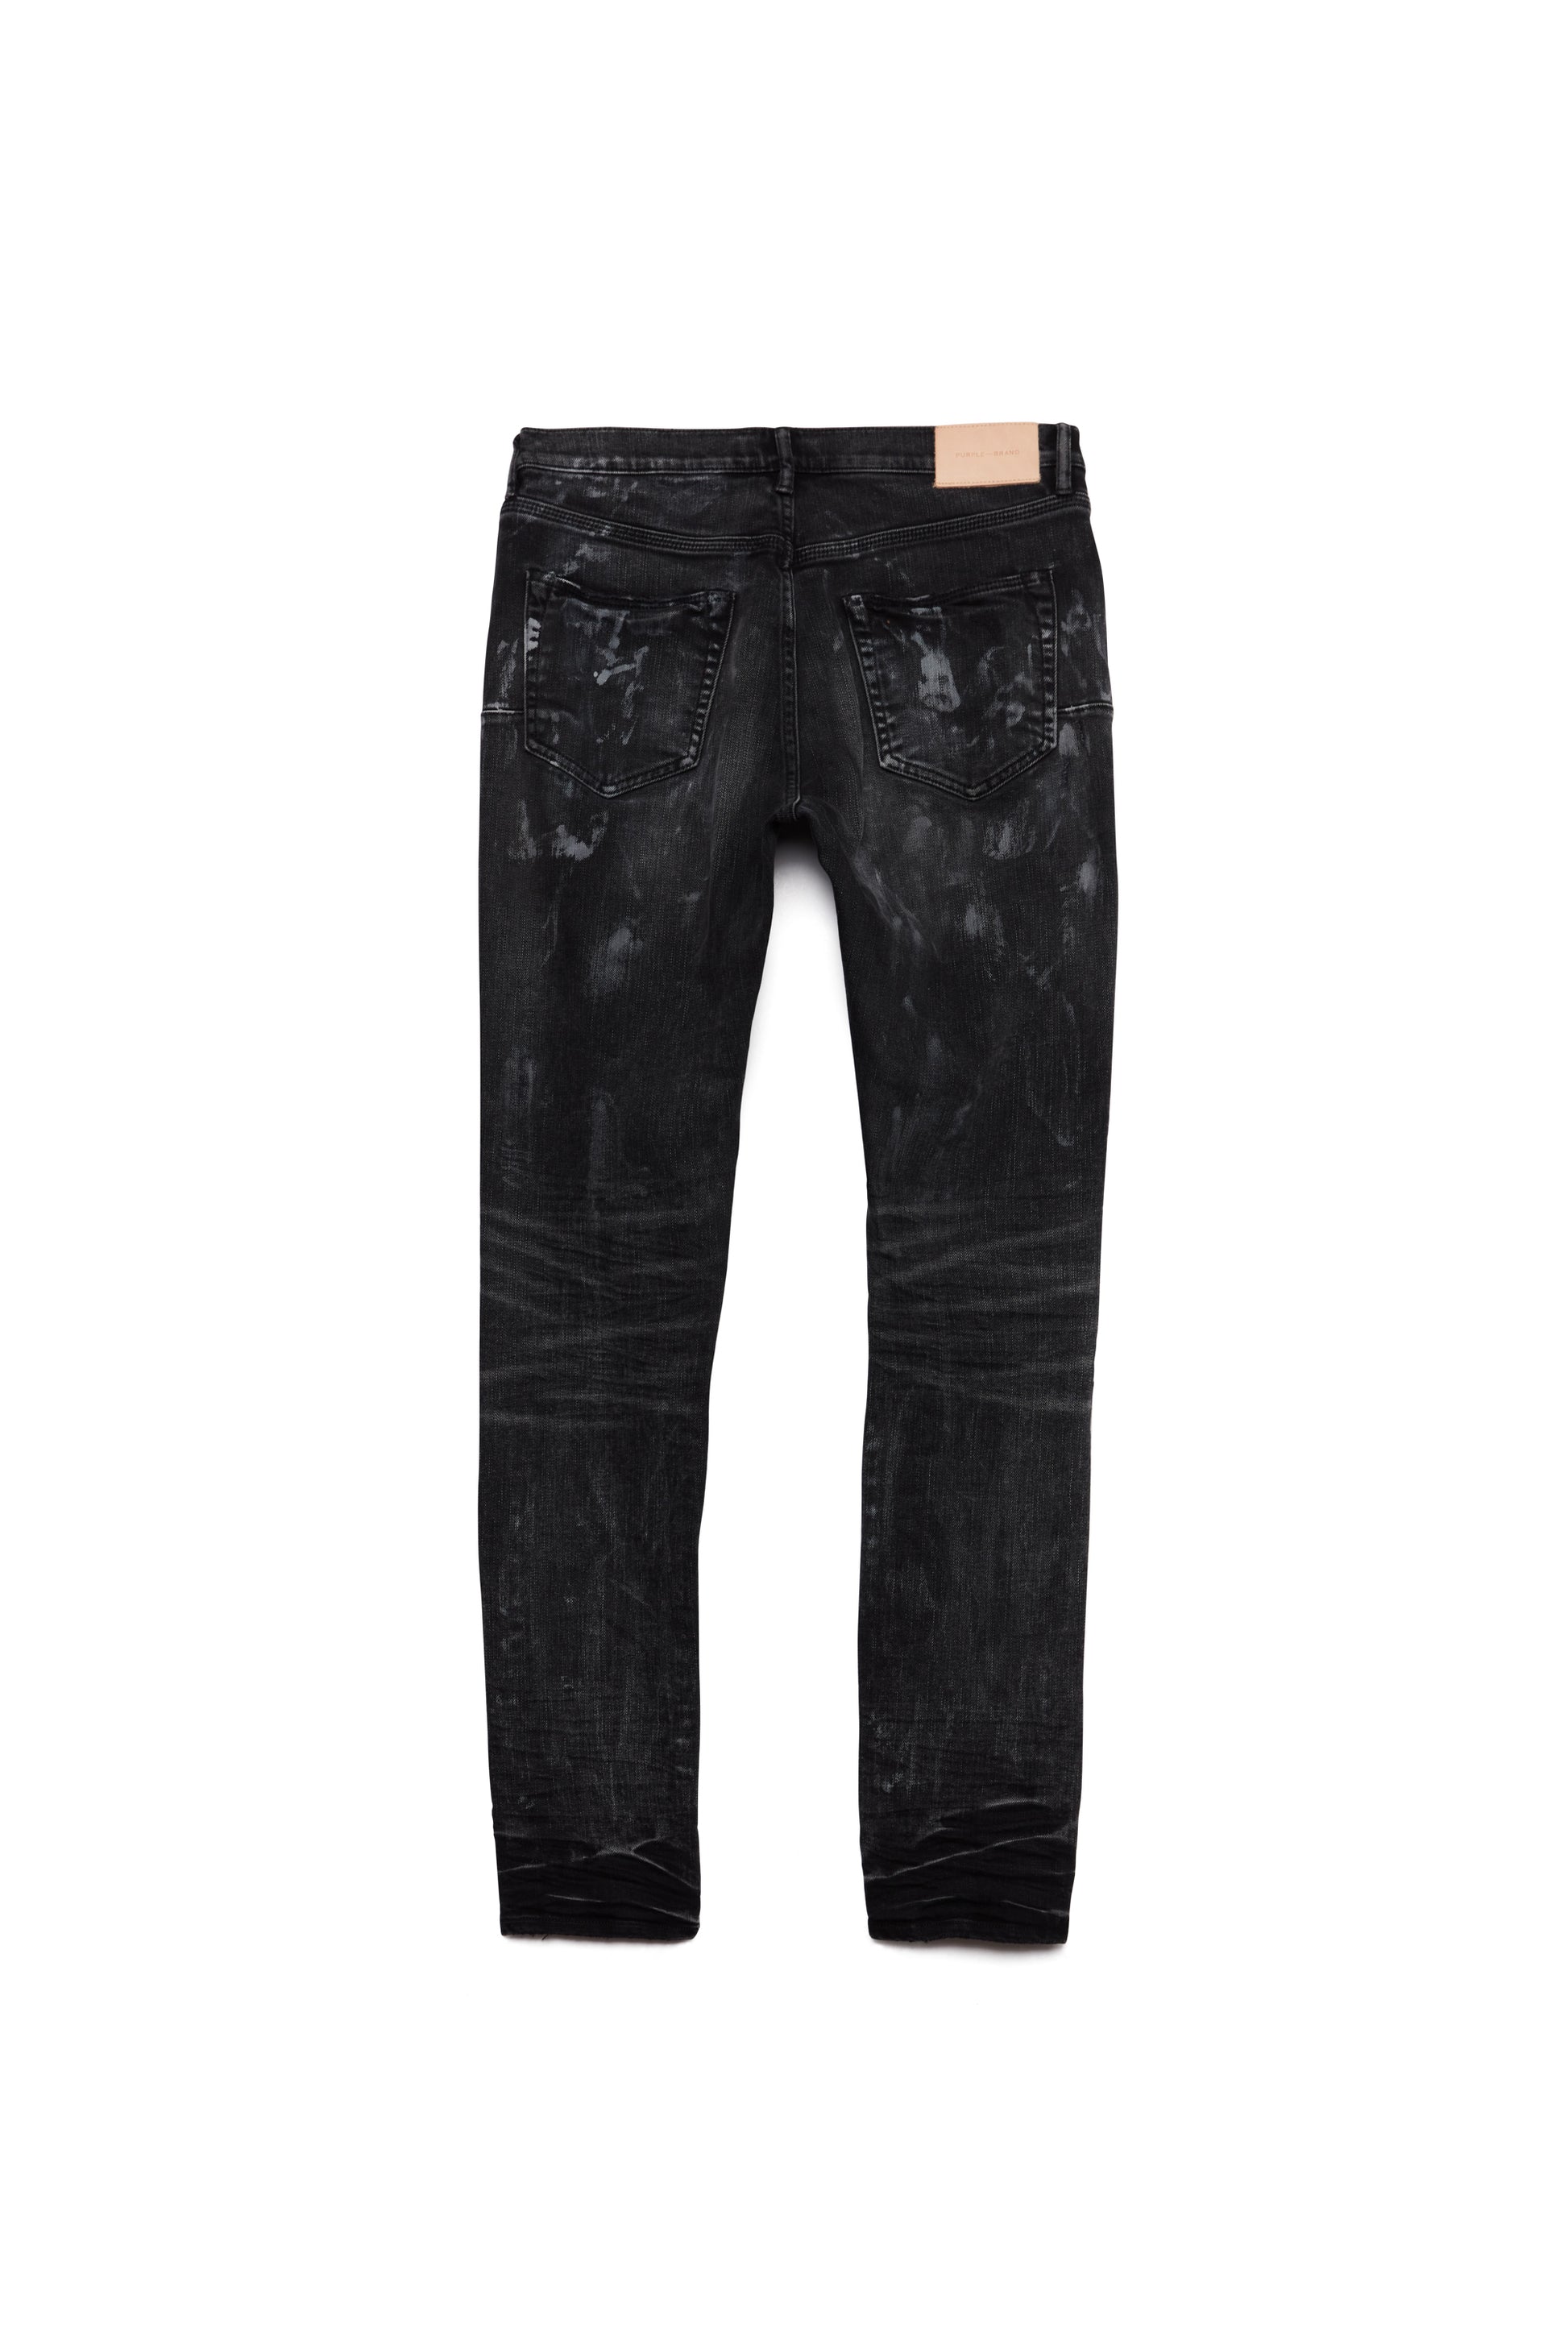 PURPLE BRAND - Men's Denim Jean - Low Rise Skinny - Style No. P001 - Super Fade Black Weft Repair - Back